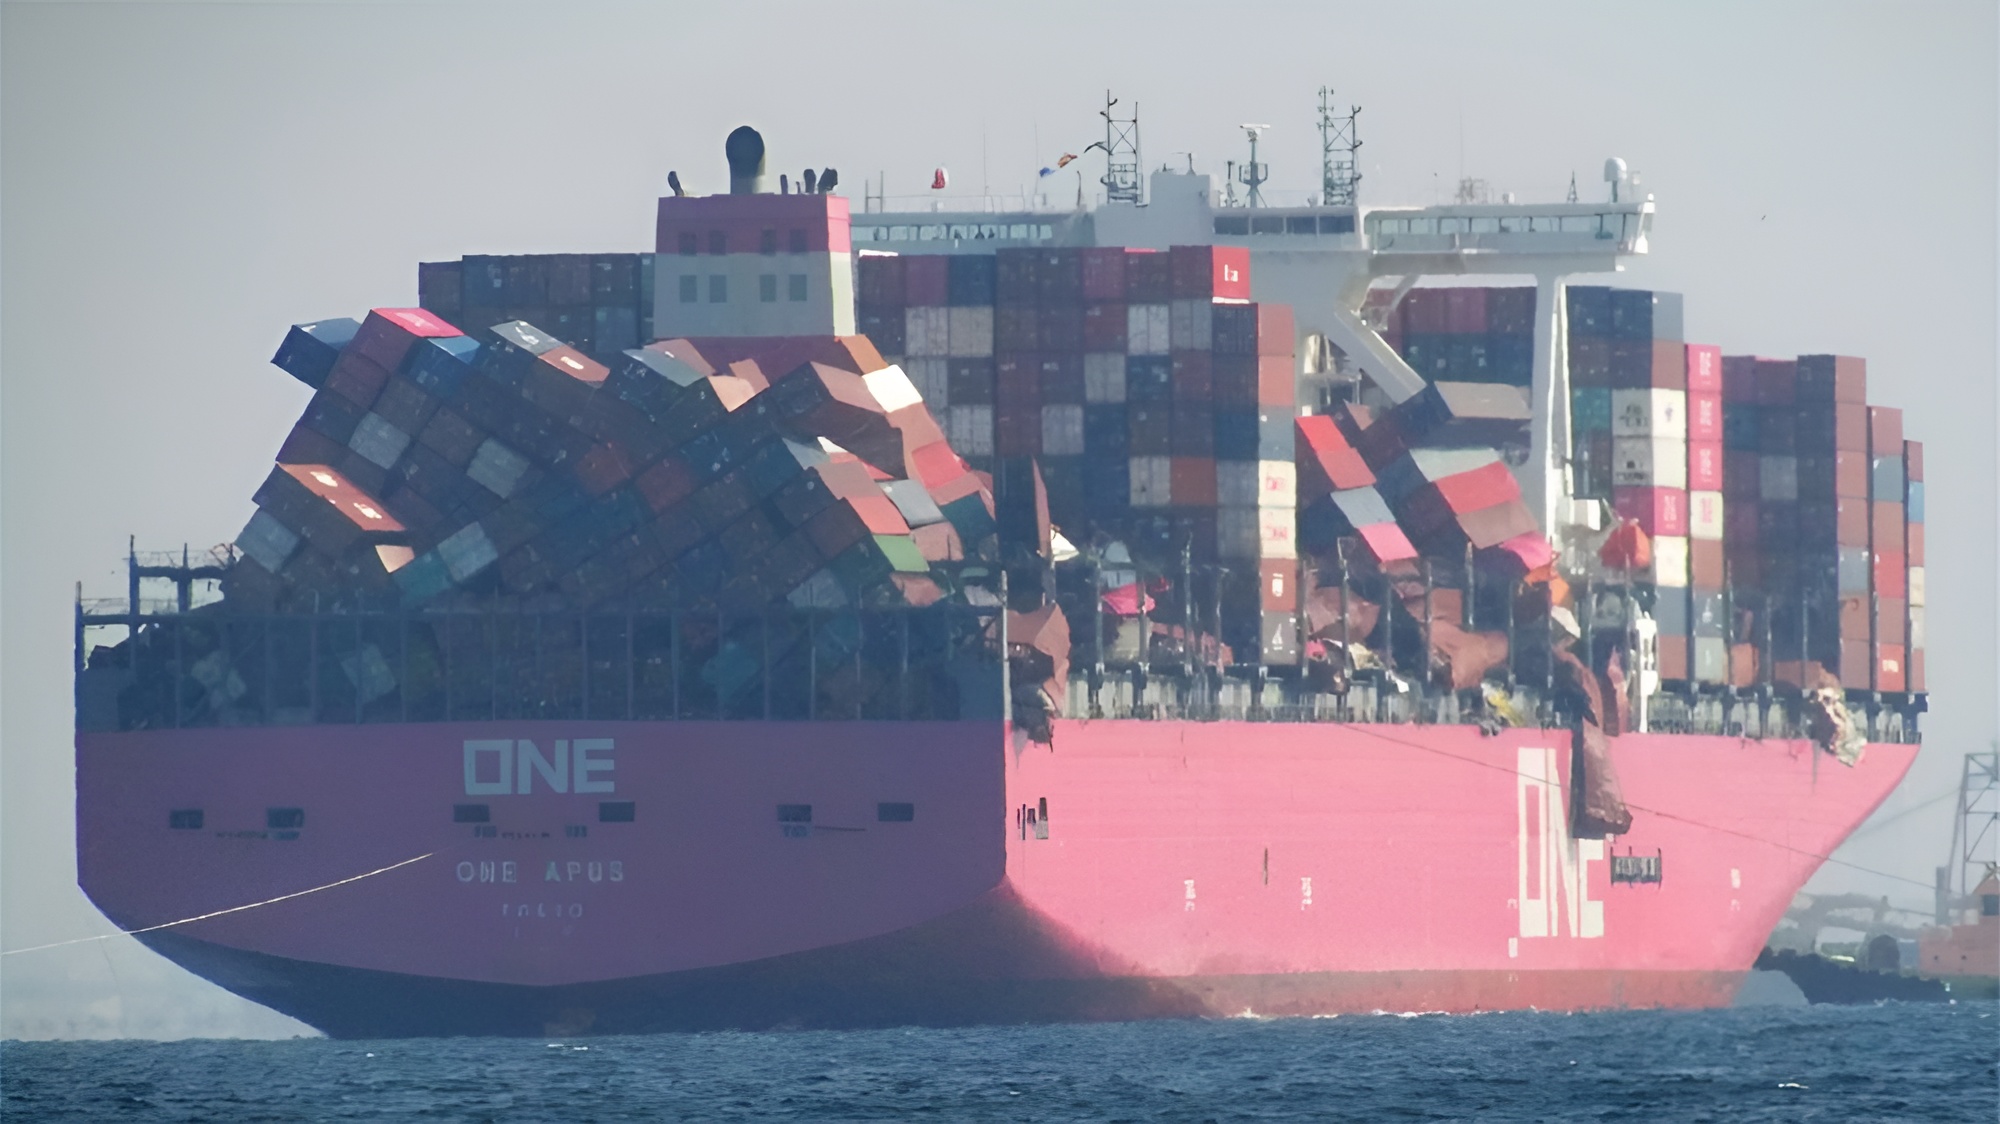 ONE Apus container ship accident